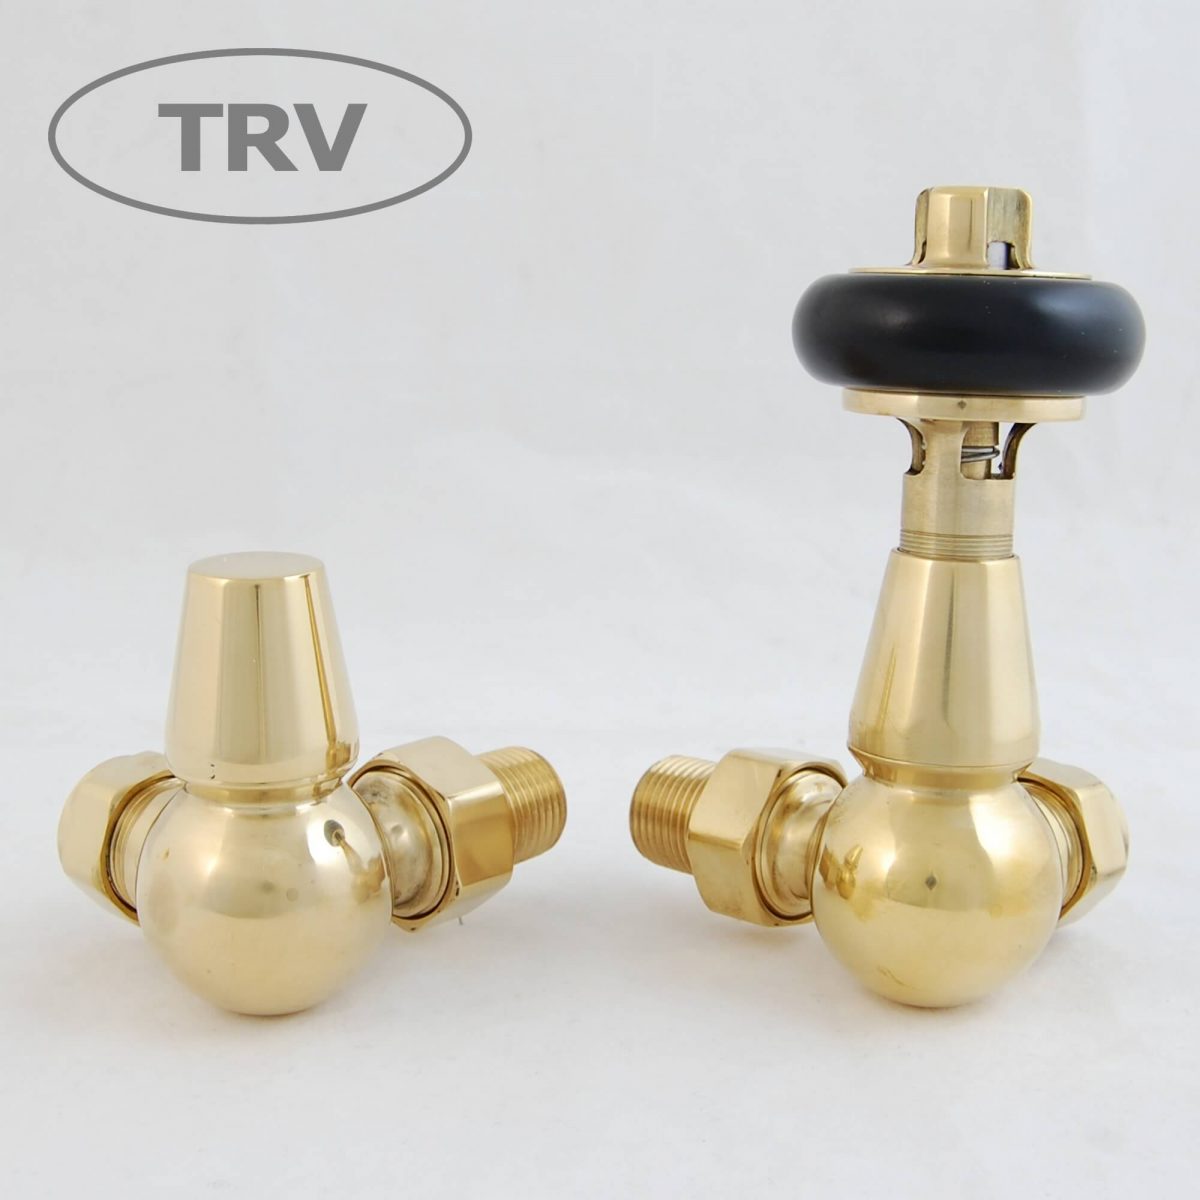 Faringdon Traditional Thermostatic Radiator Valve - Un-Lacquered Brass (Corner TRV)